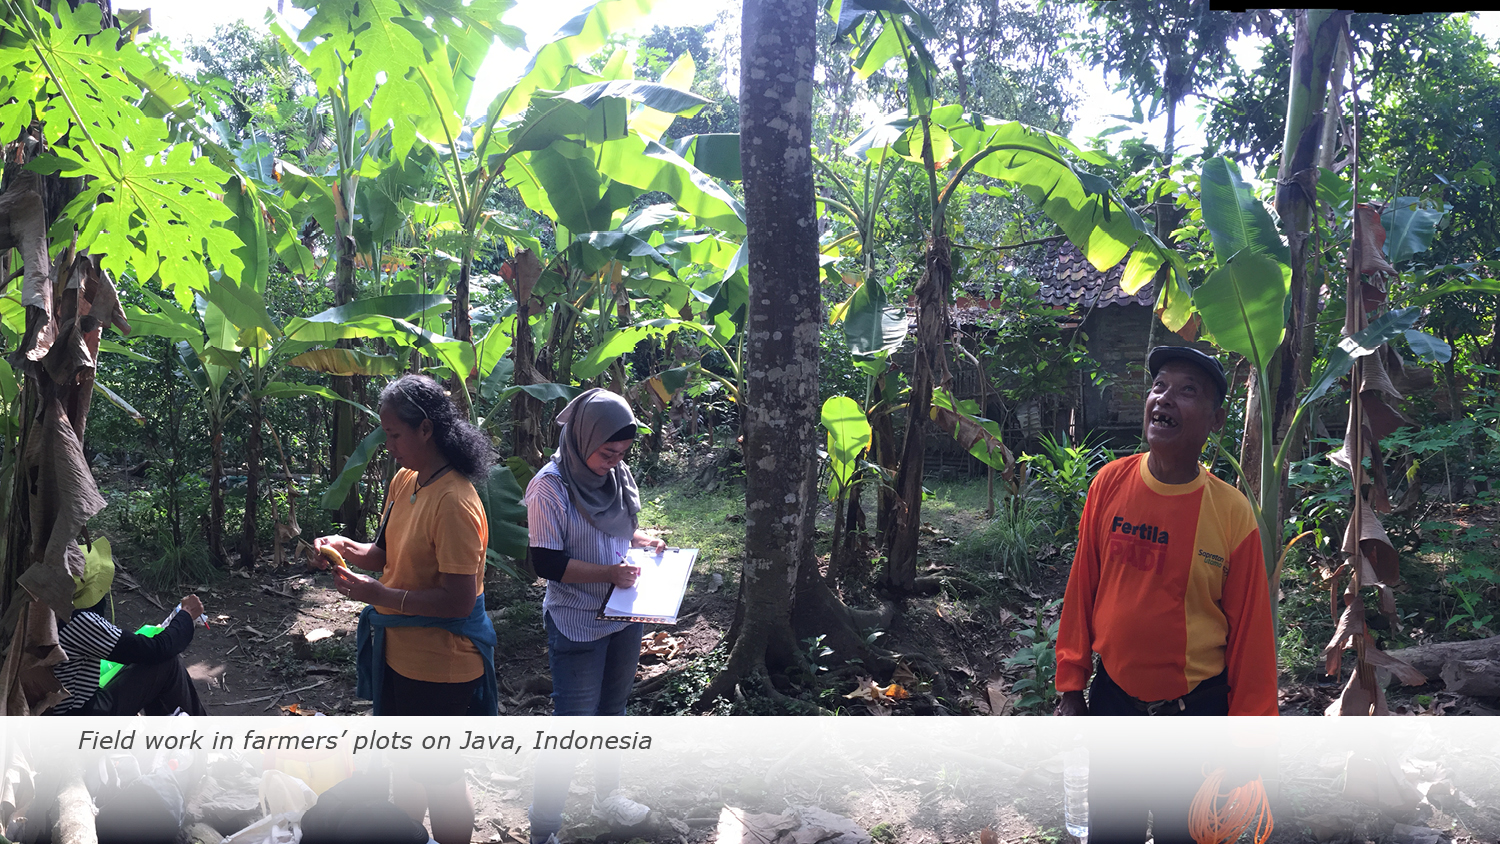 Field work in farmers' plots on Java, Indonesia